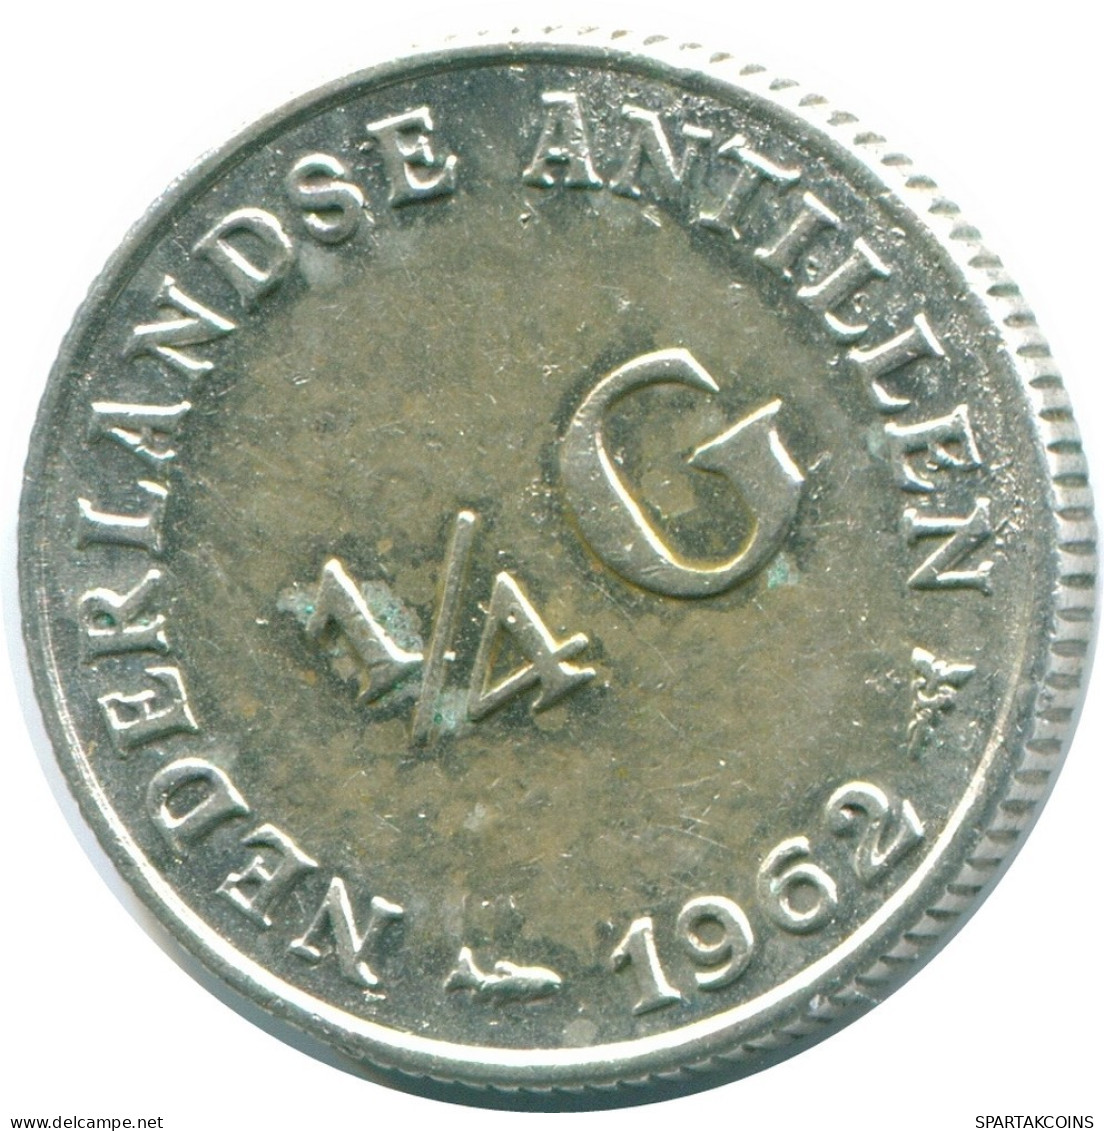 1/4 GULDEN 1962 NETHERLANDS ANTILLES SILVER Colonial Coin #NL11105.4.U.A - Netherlands Antilles